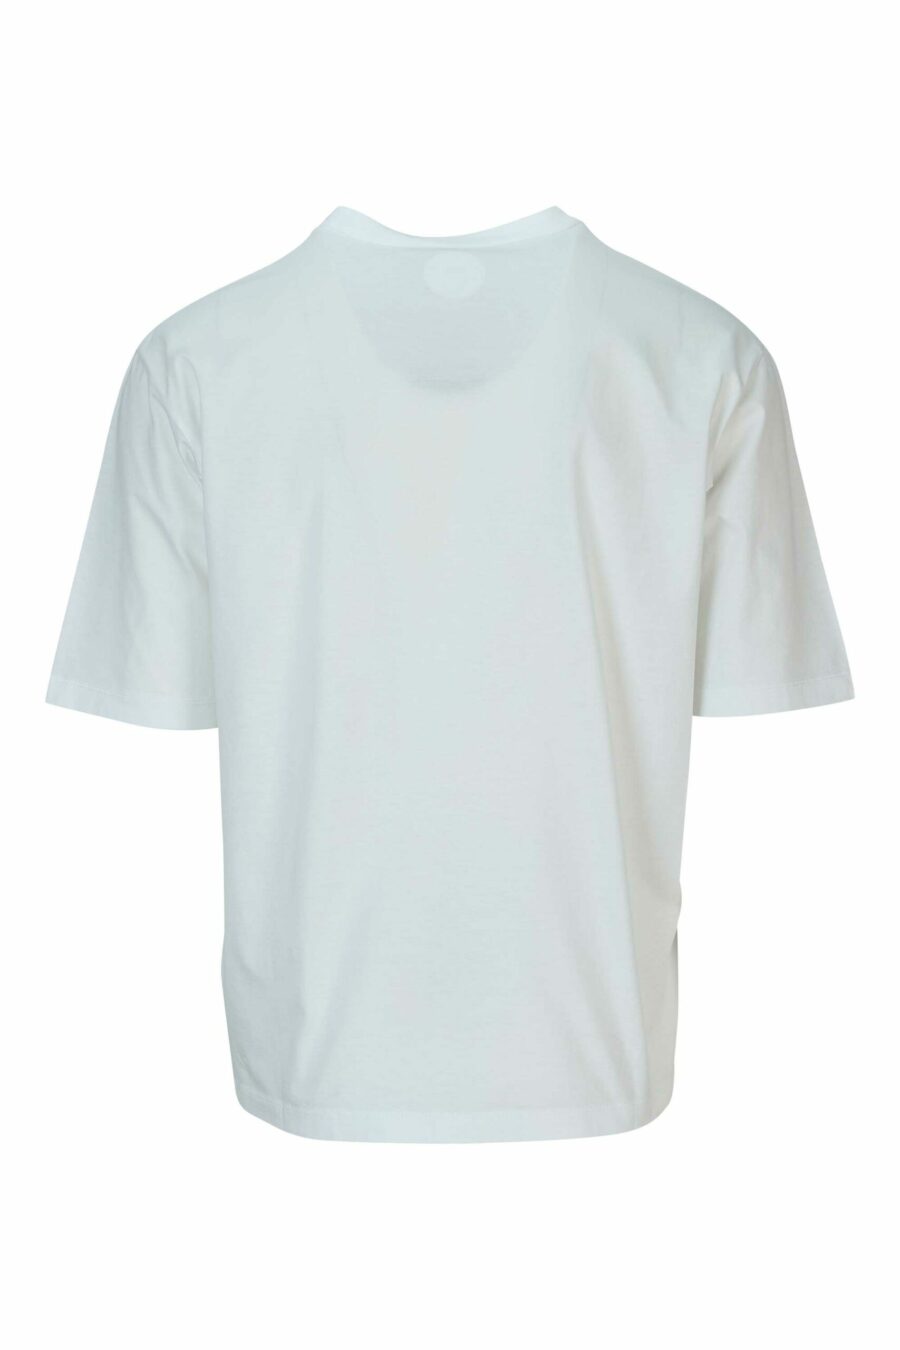 Camiseta blanca "oversize" con maxilogo "icon" verde neon borroso - 8054148359454 1 scaled